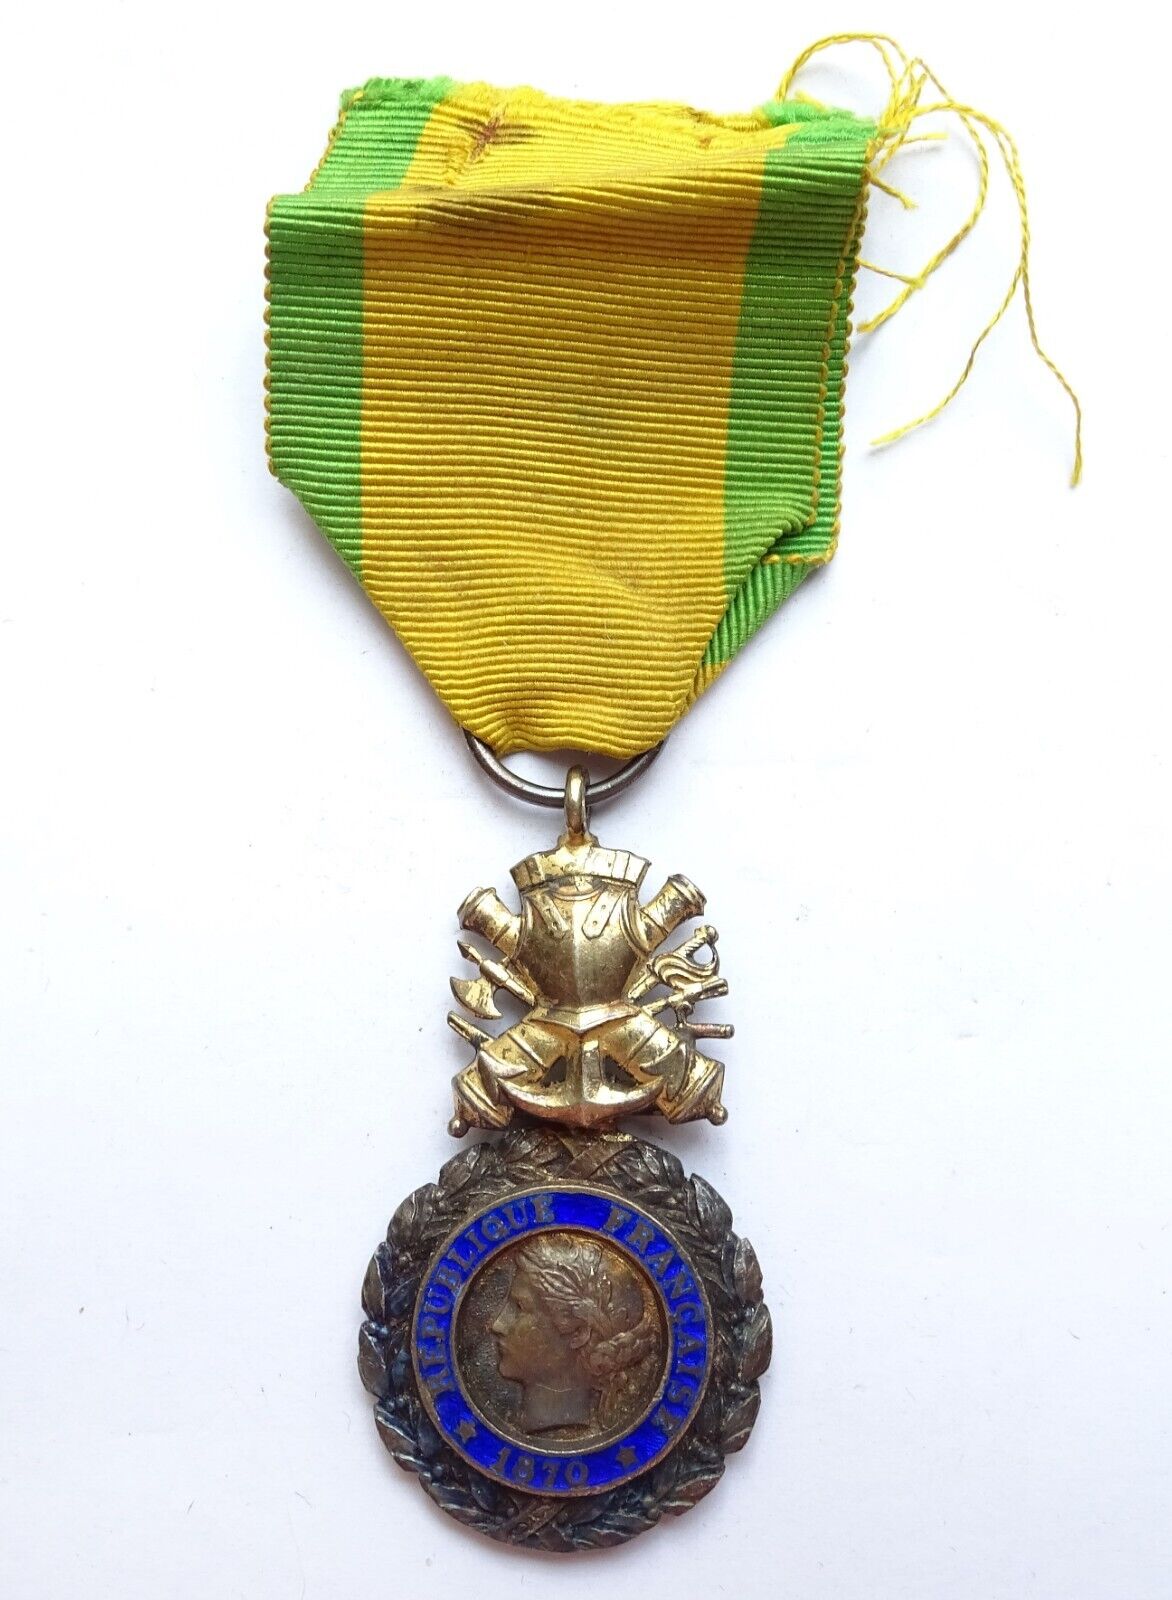 1870 19gr76 Medal of Value and Discipline Silver